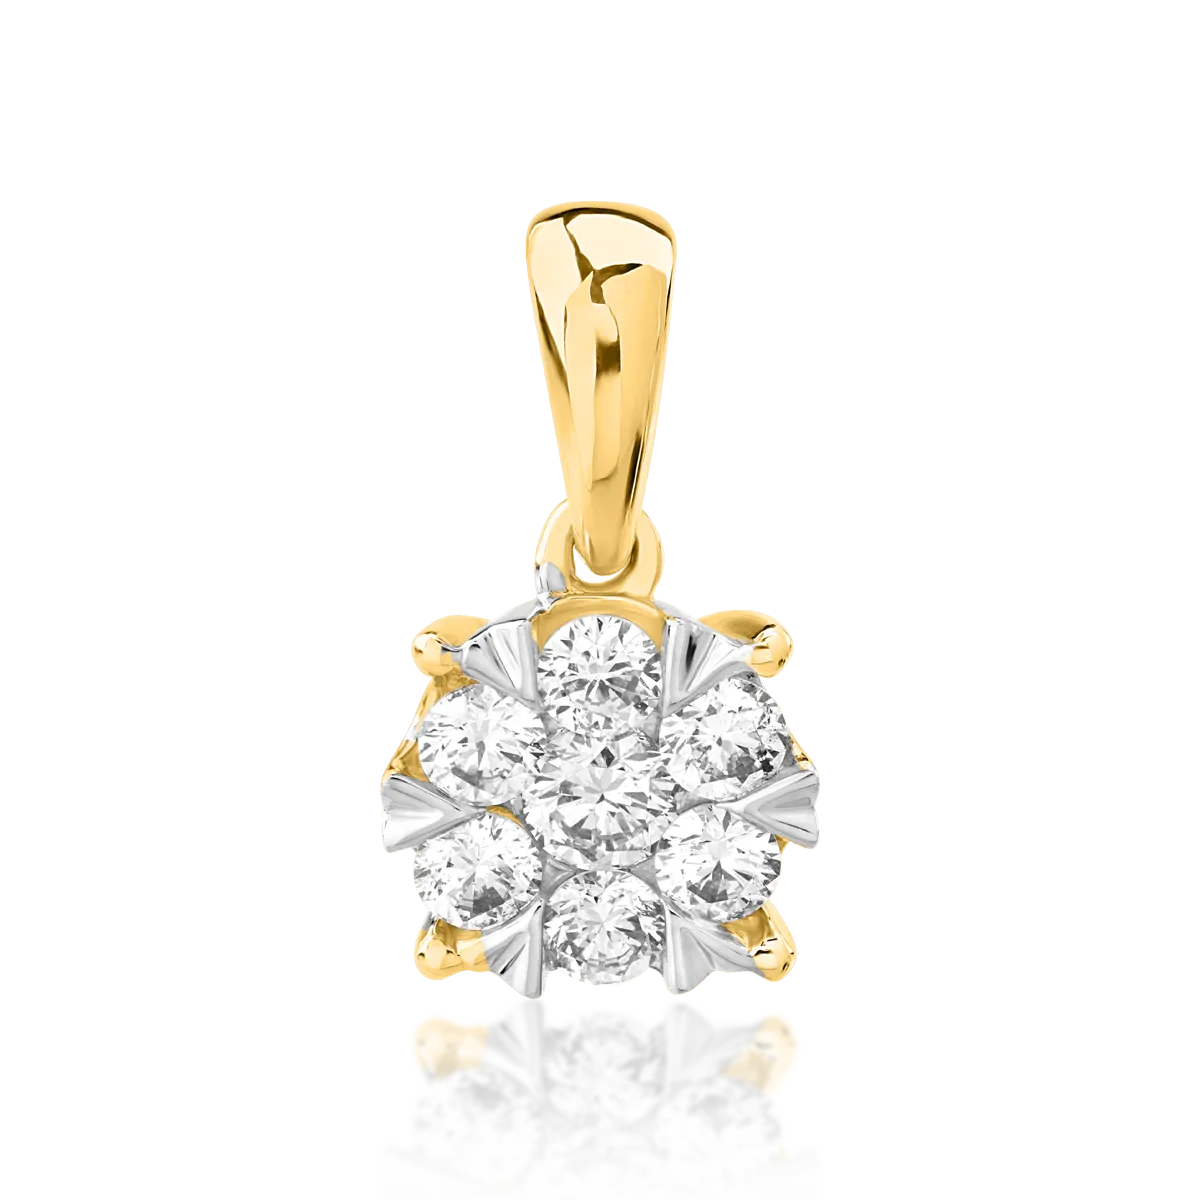 18K yellow gold pendant with 0.5ct diamonds